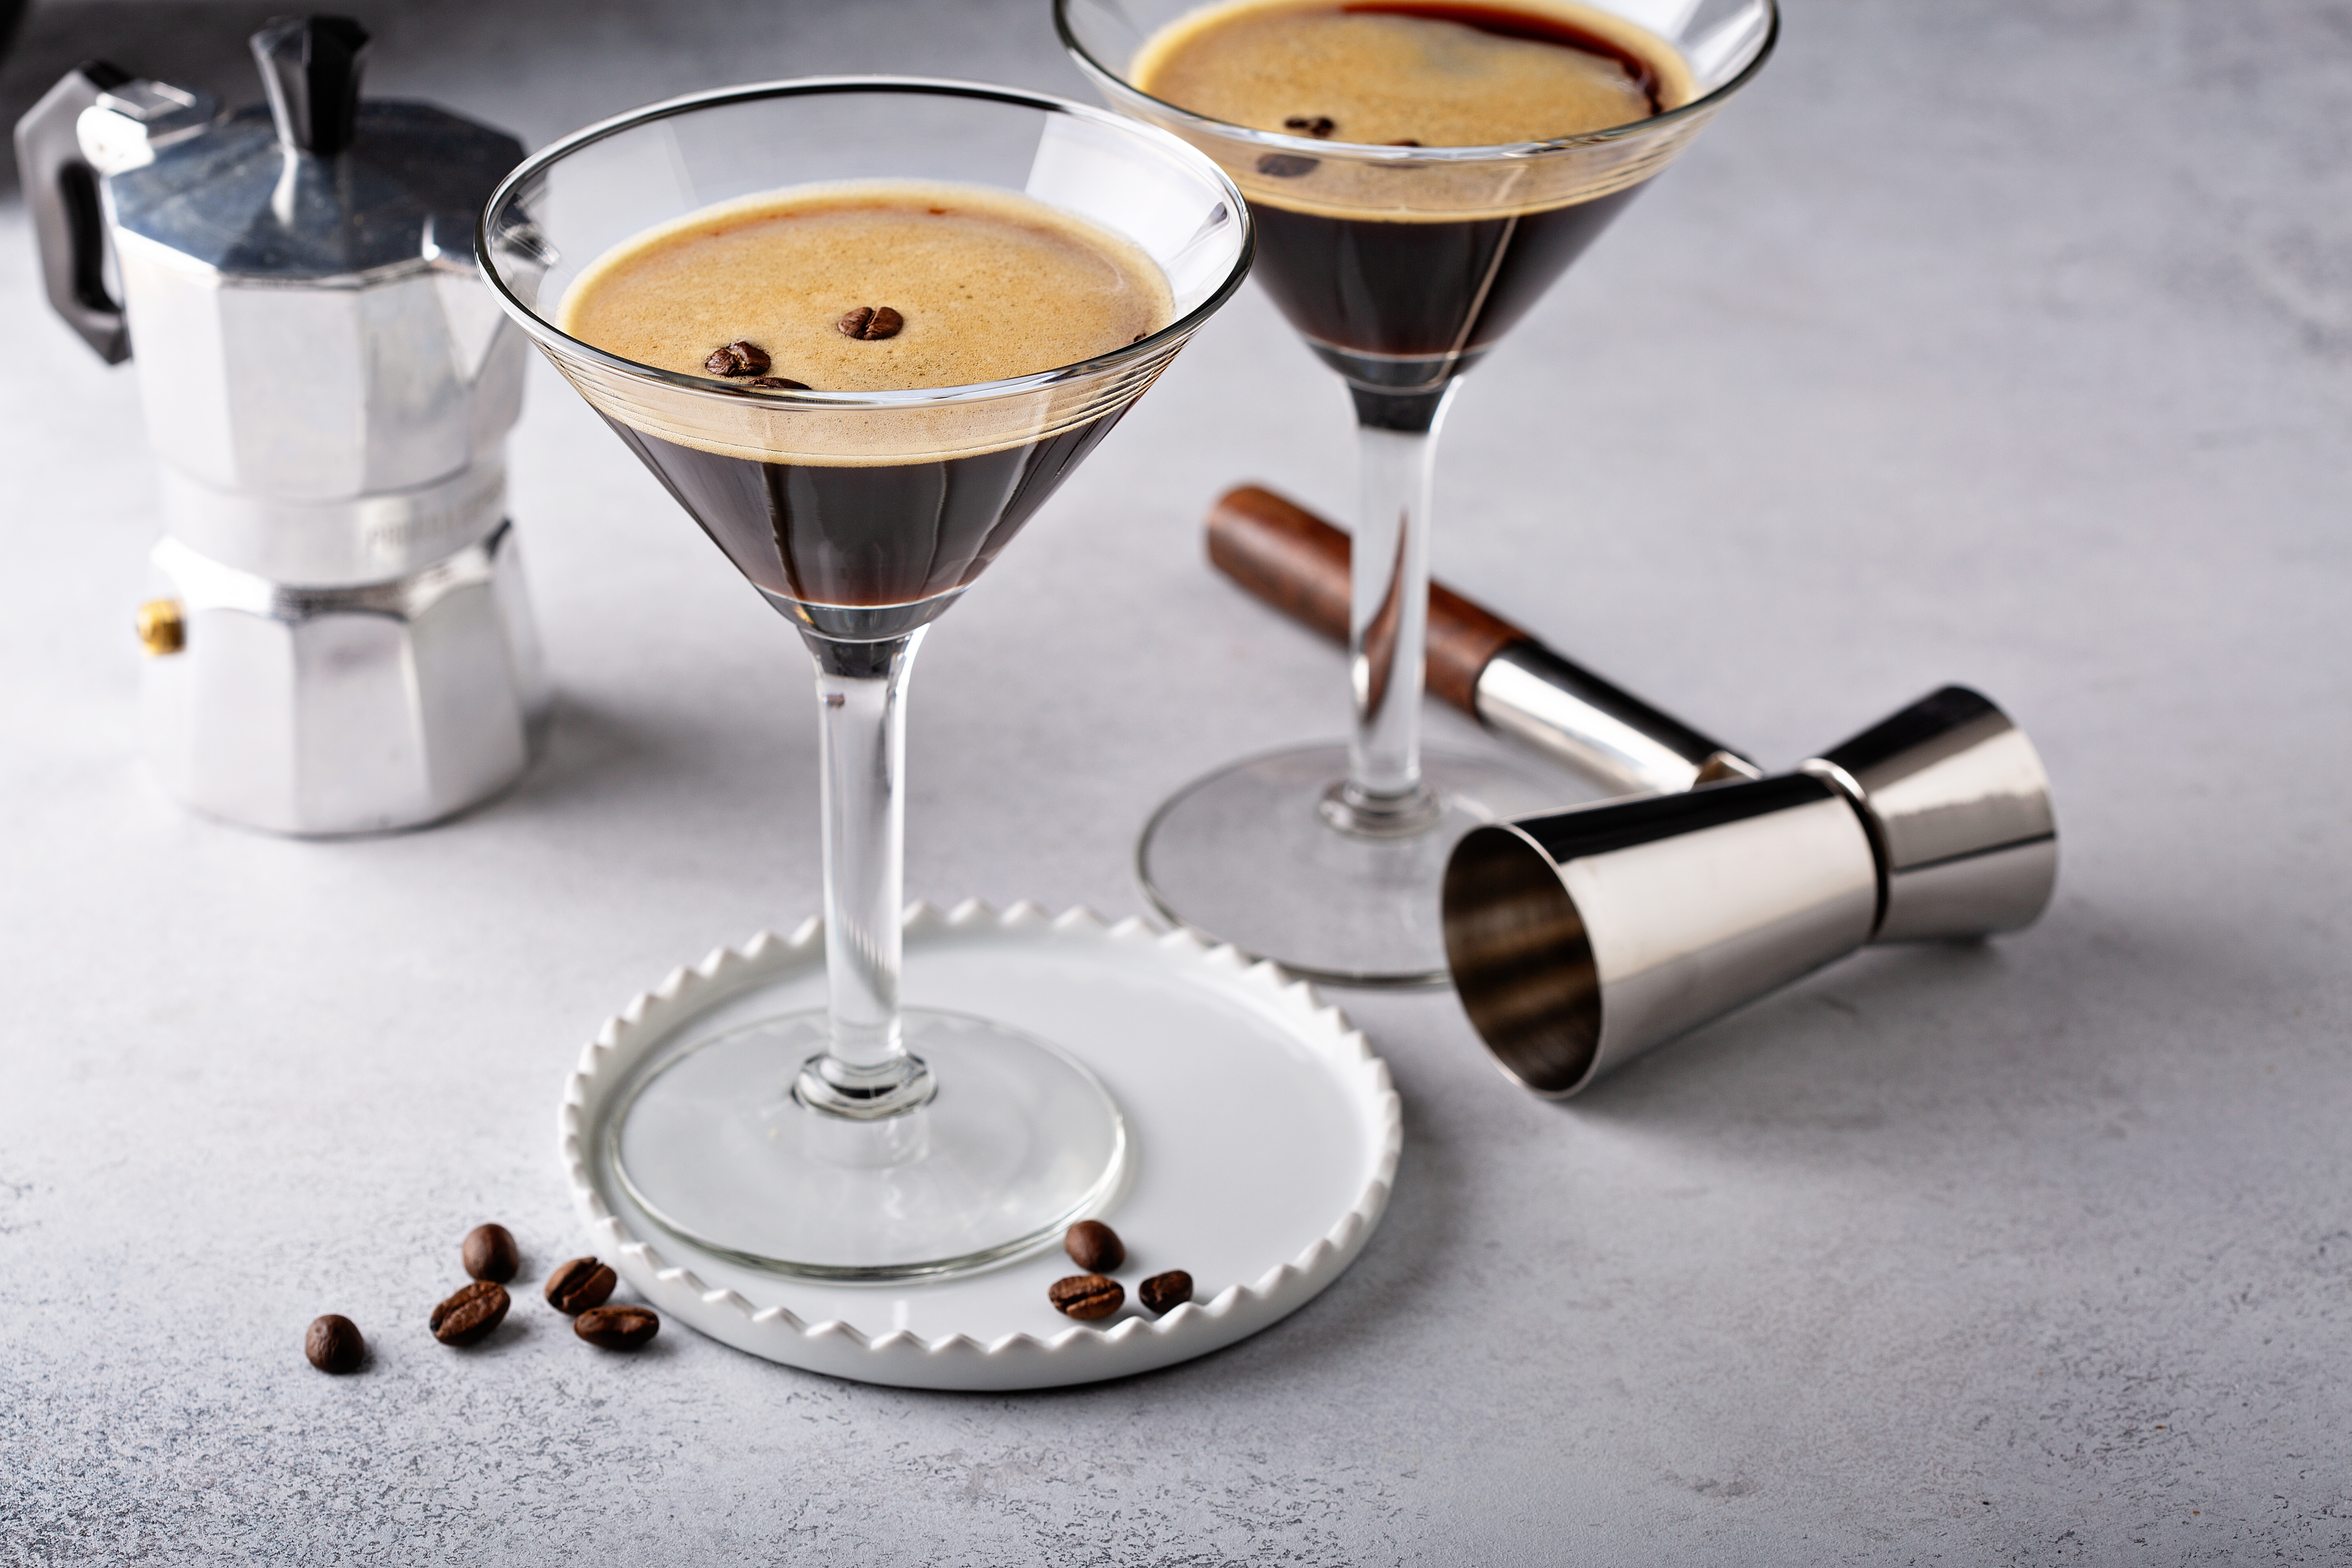 Raspberry Chocolate Espresso Martini - The Healthful Ideas